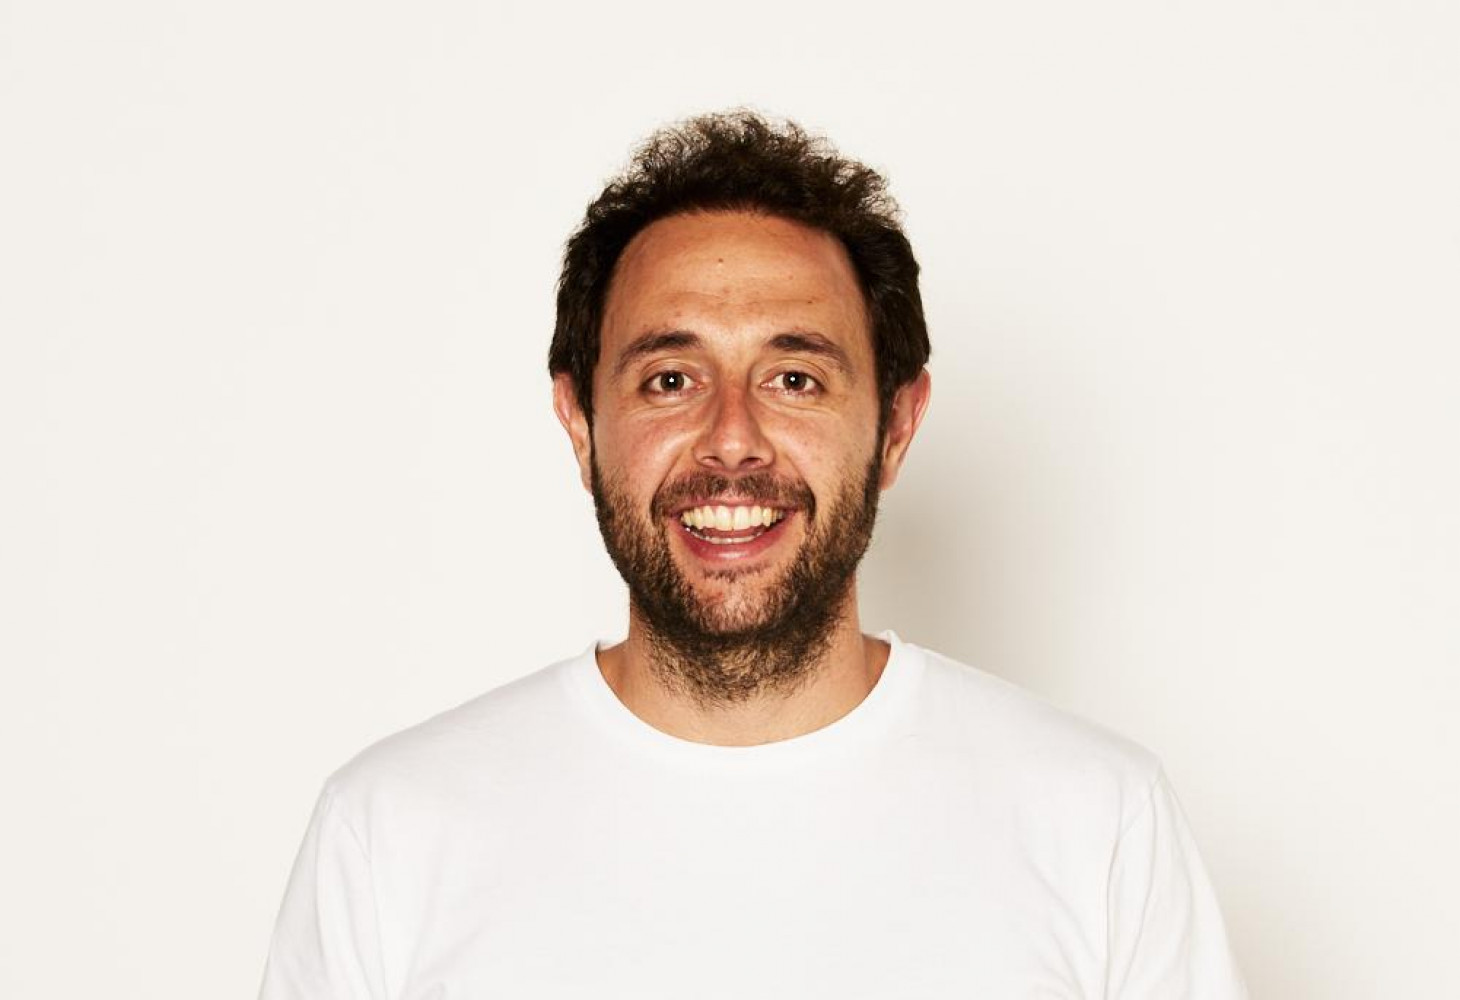 Pepe Martin, CEO de Minimalism brand e referente en emprendemento consciente, sustentabilidade e transparencia